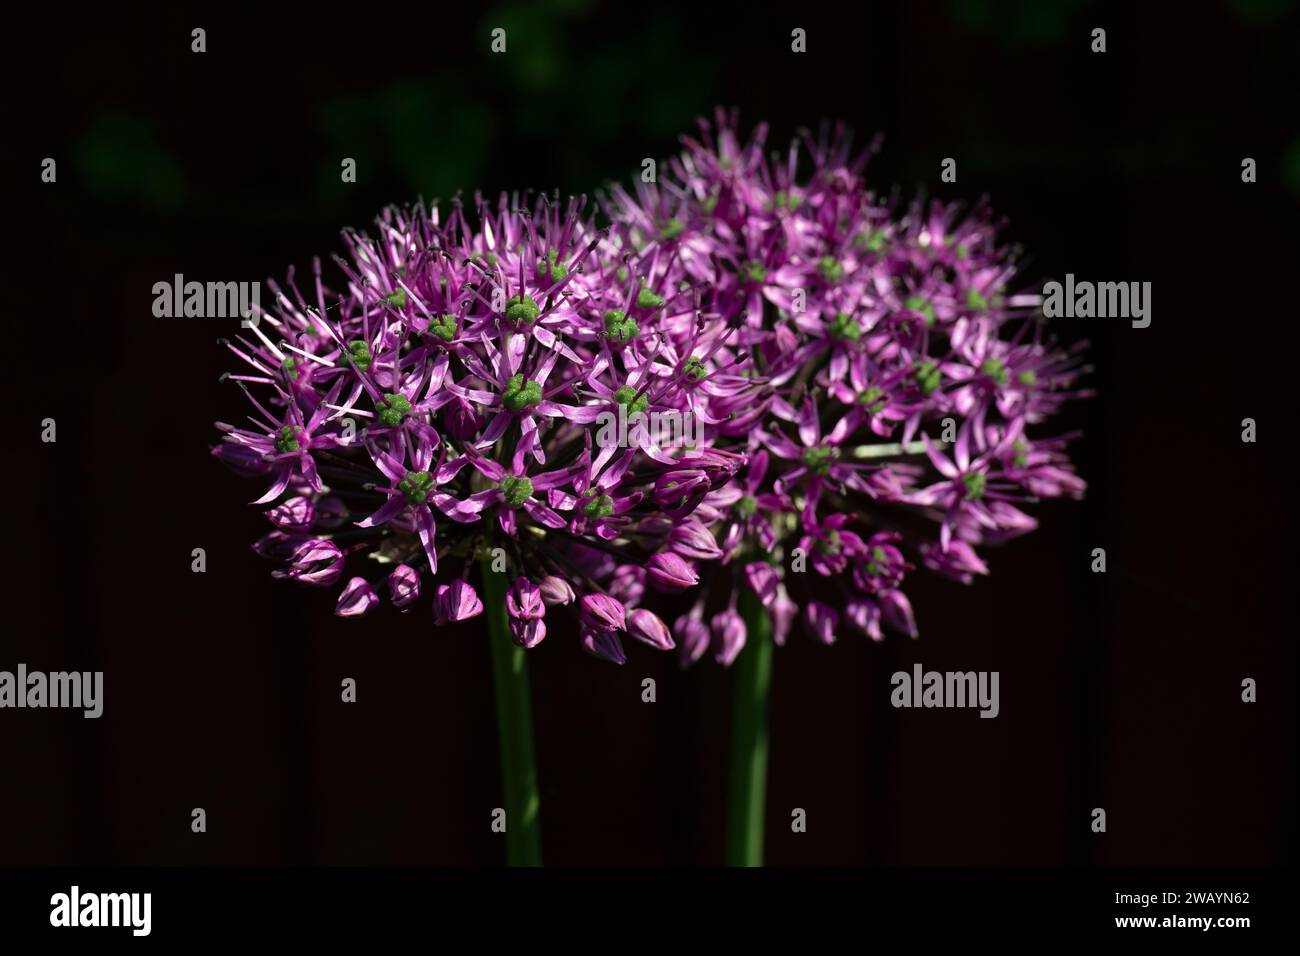 UK, England, London, Ealing, Allium Hollandicum 'Purple Sensation' in Bloom (detail) Stock Photo